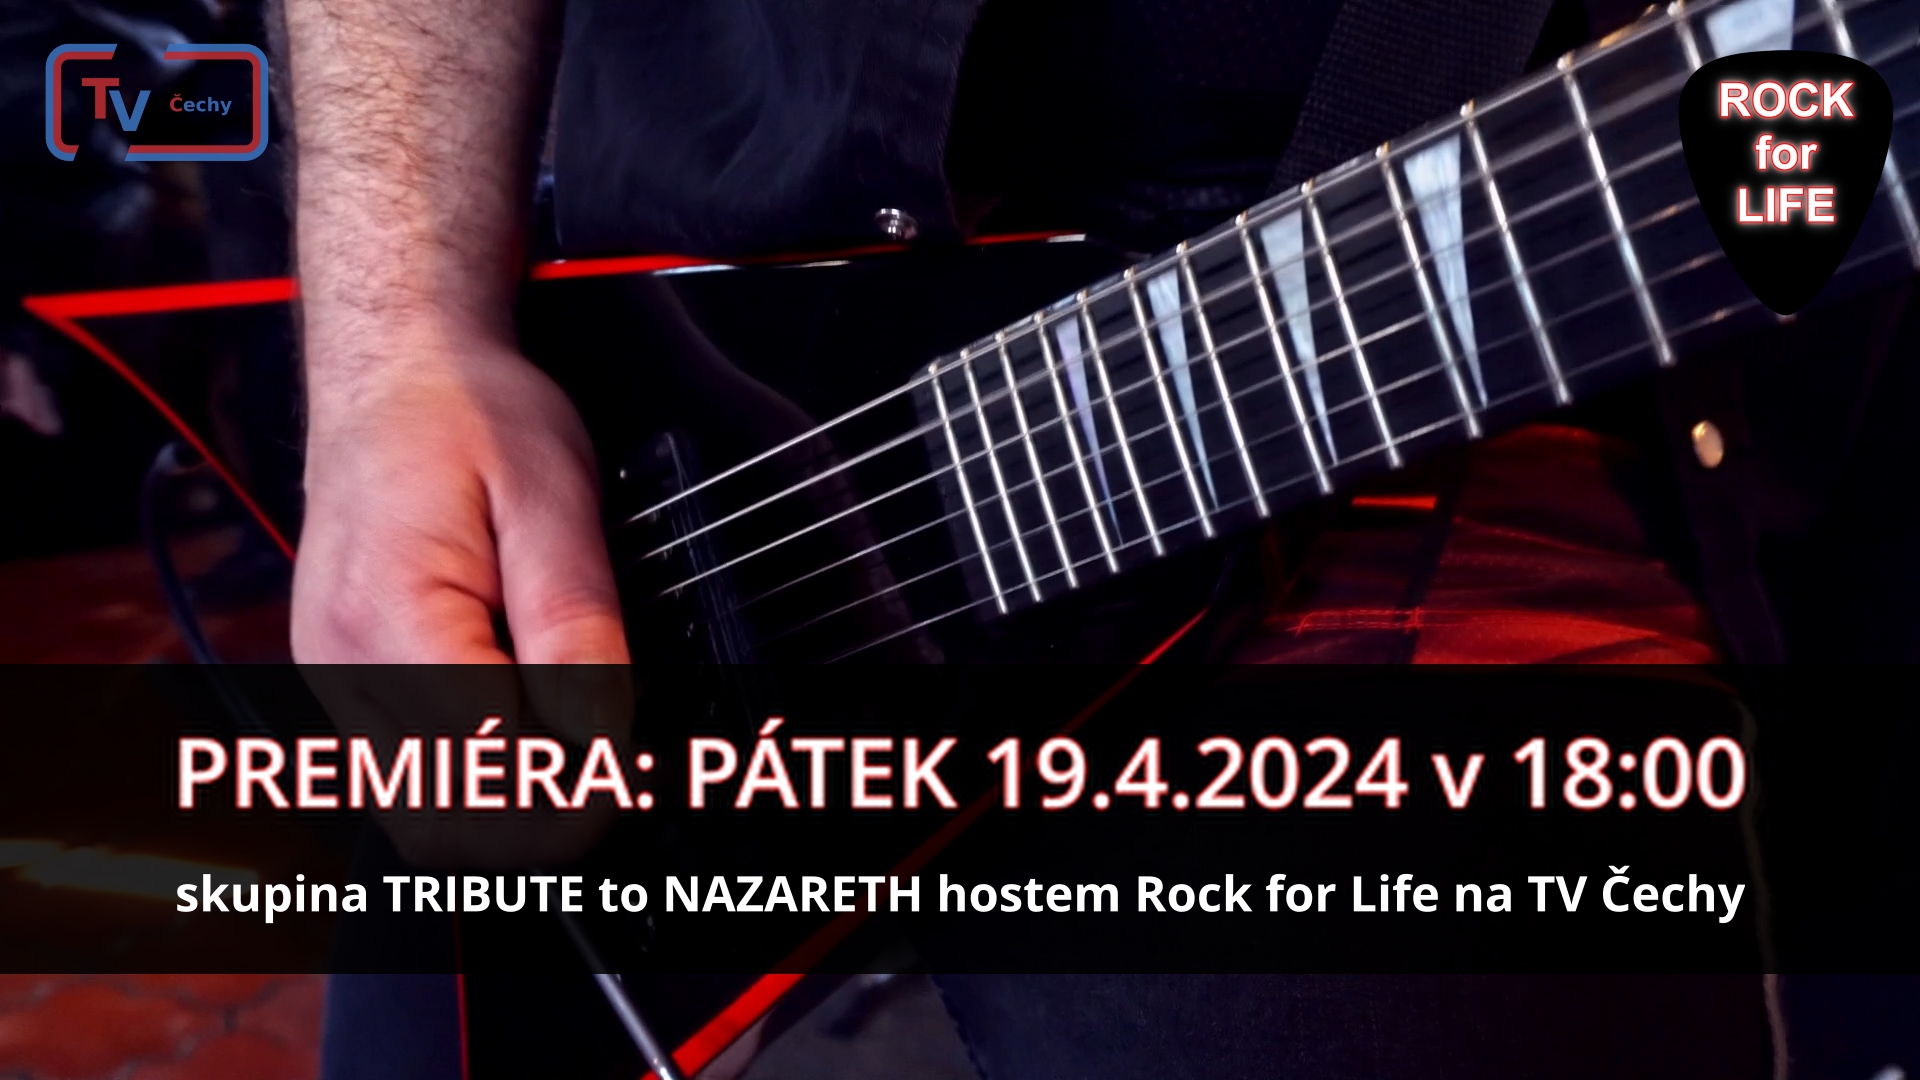 Tribute to Nazareth v Rock for Life již v pátek 19.4.2024